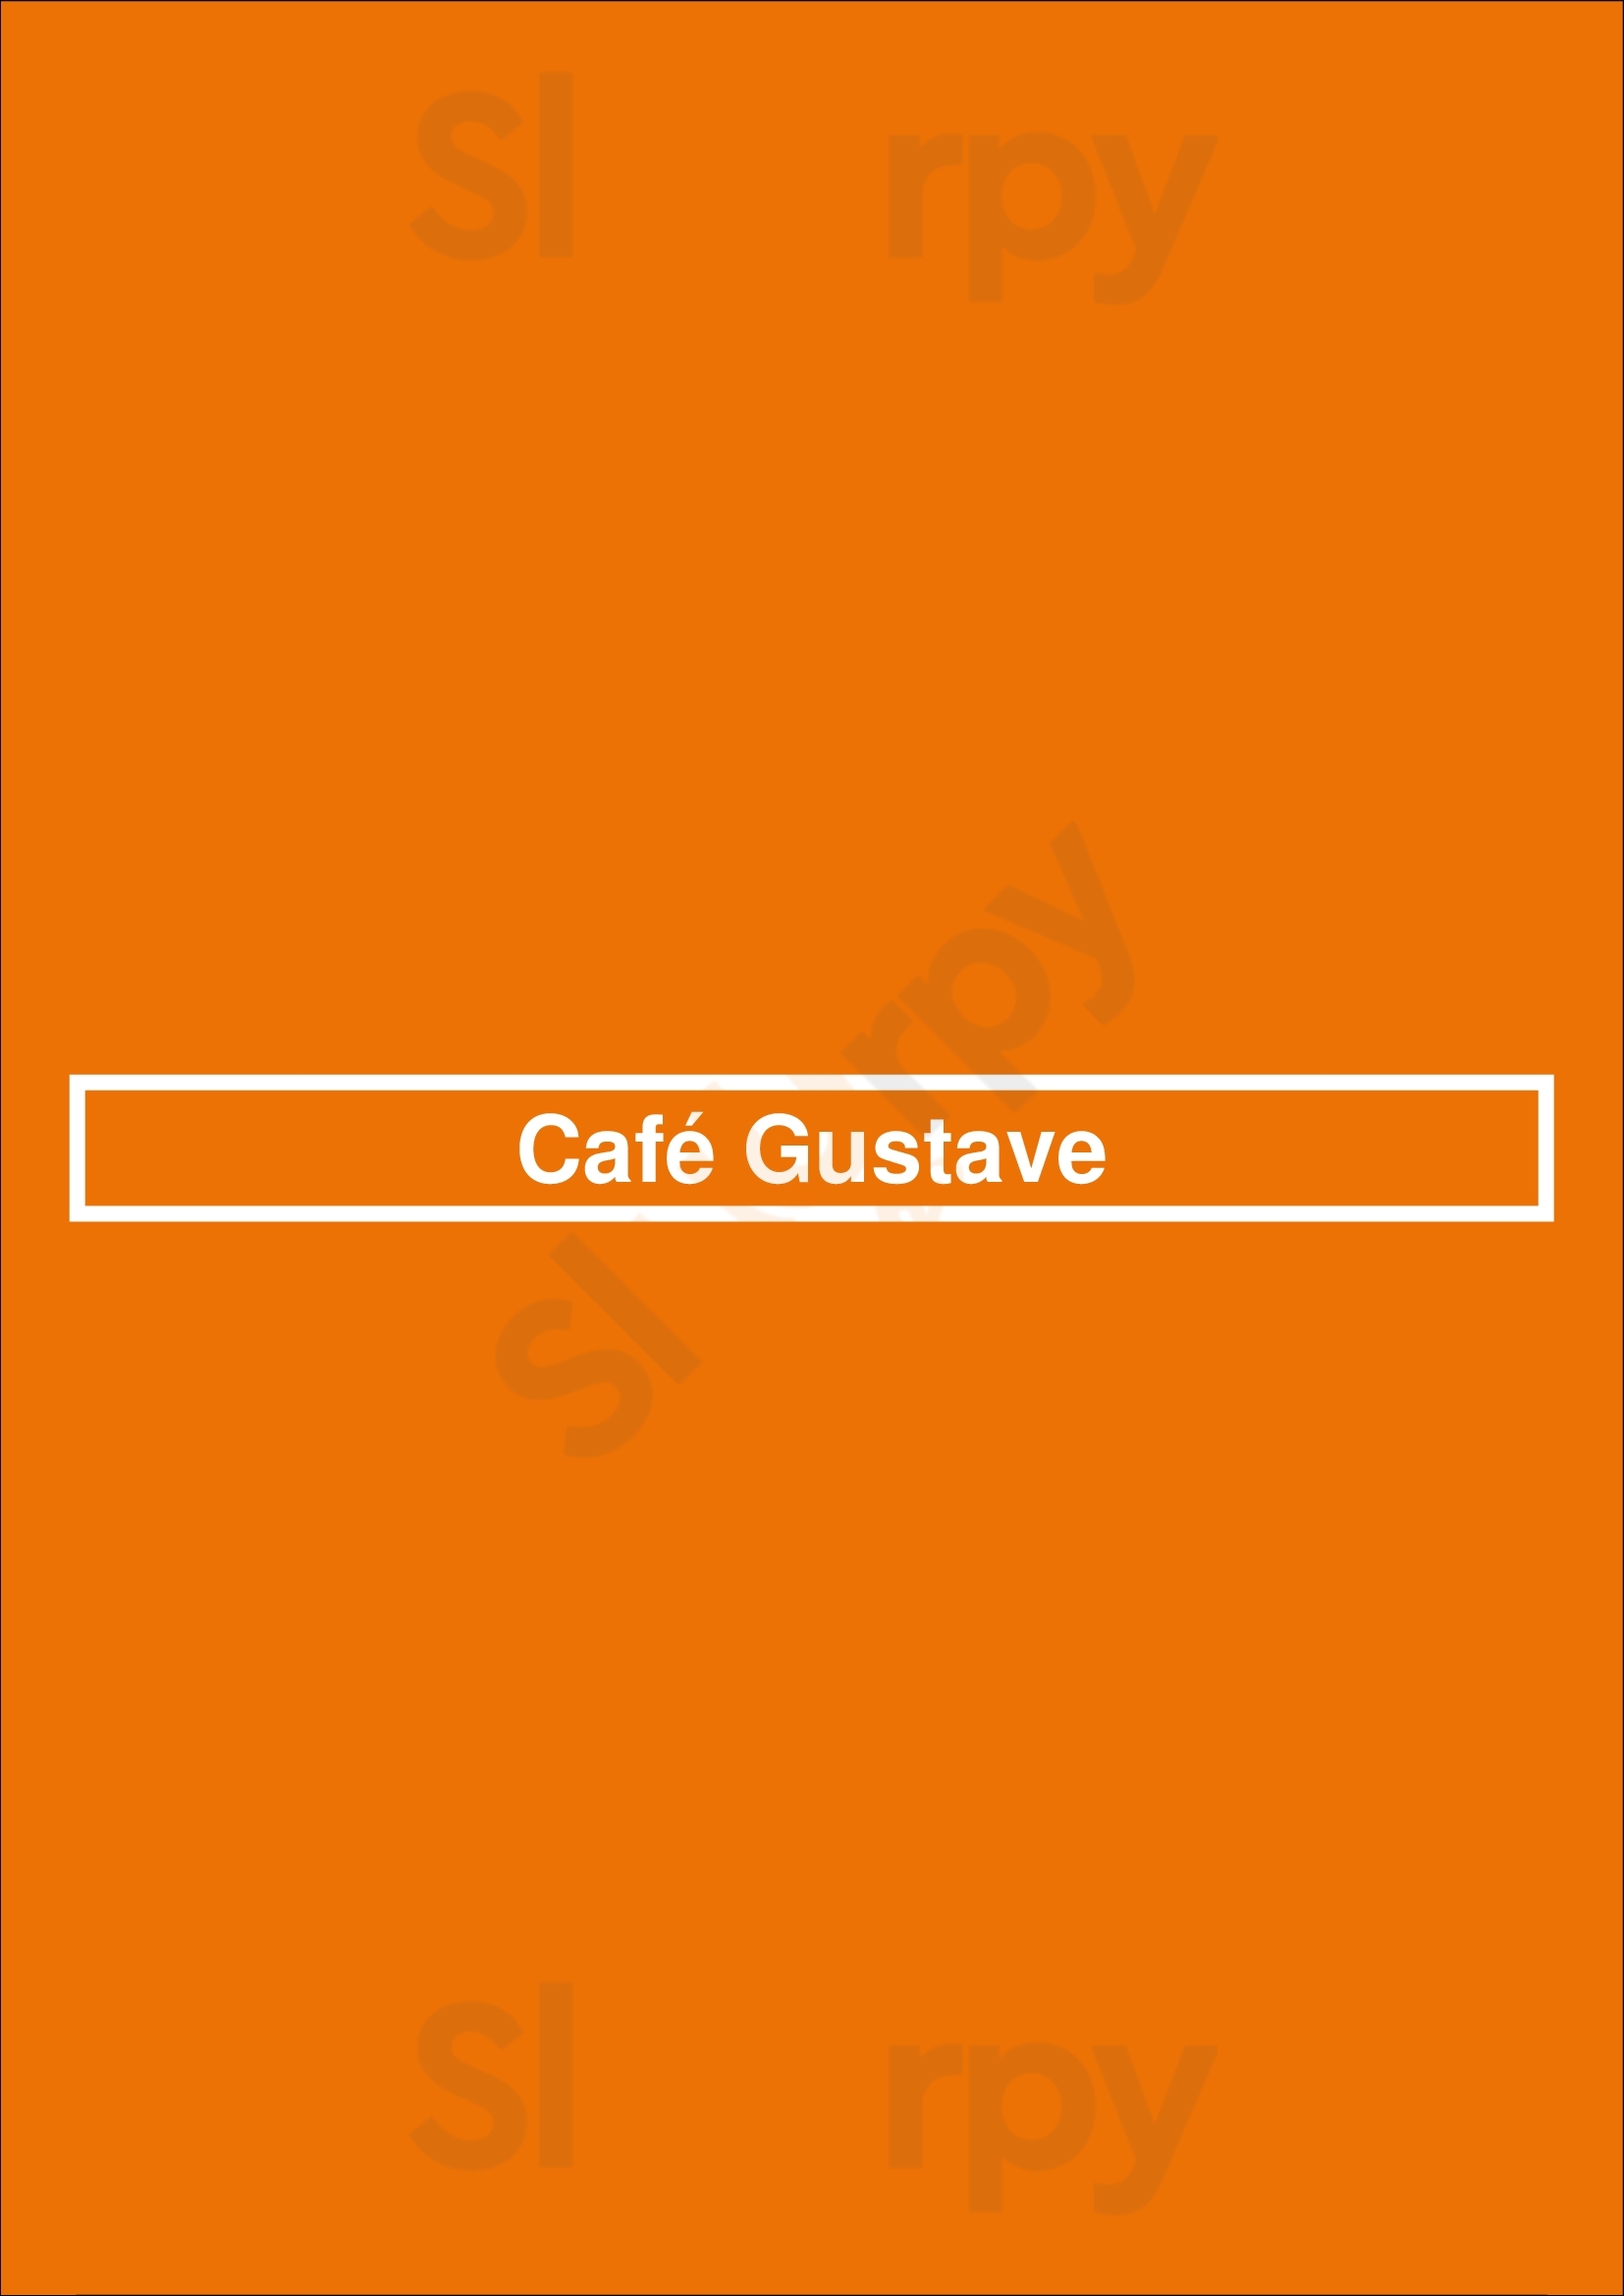 Café Gustave Nice Menu - 1